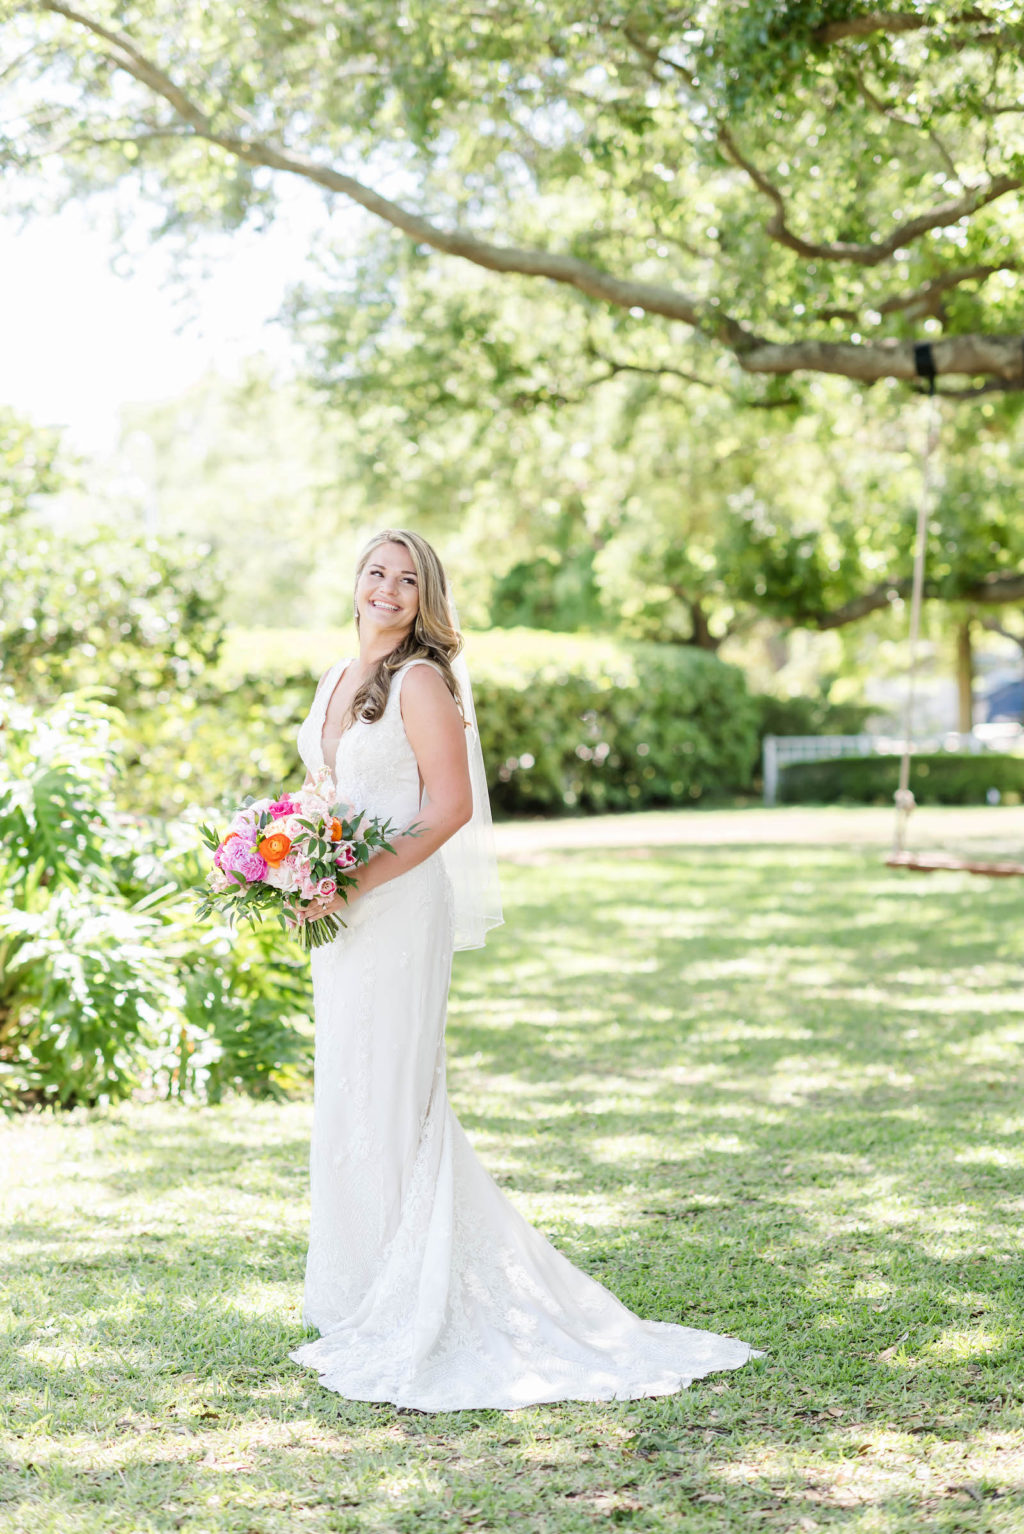 Bride in Lace Maggie Sorento Wedding Dress Portrait | Pink Bouquet of Peonies for Tampa Bay Garden Wedding